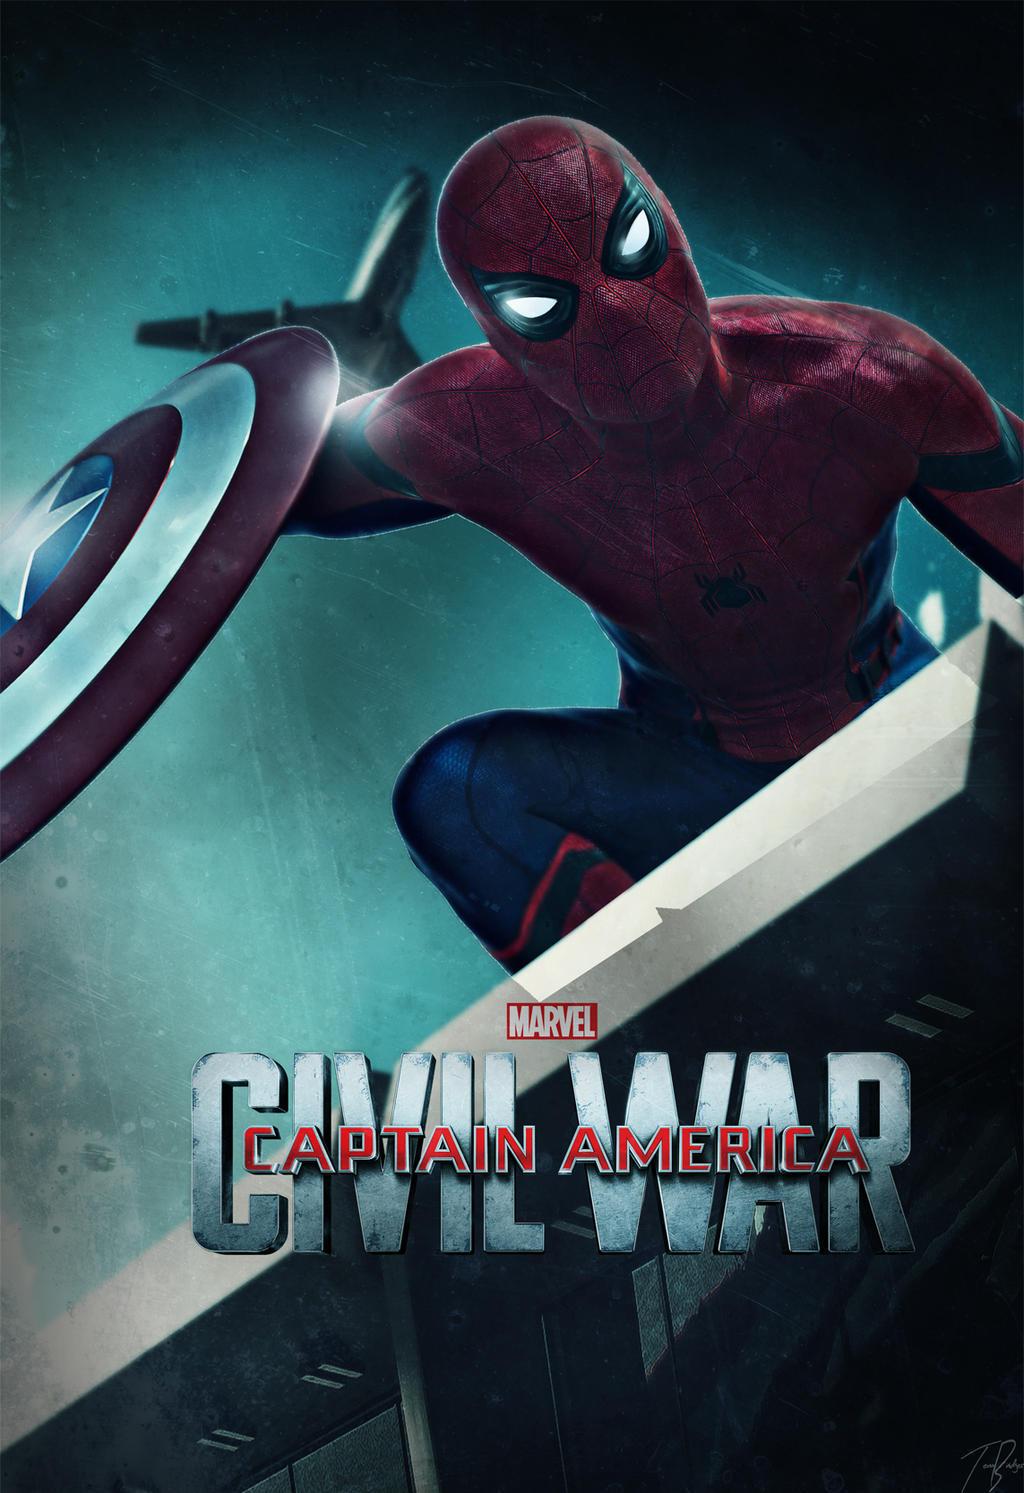 Image result for captain america civil war poster spiderman